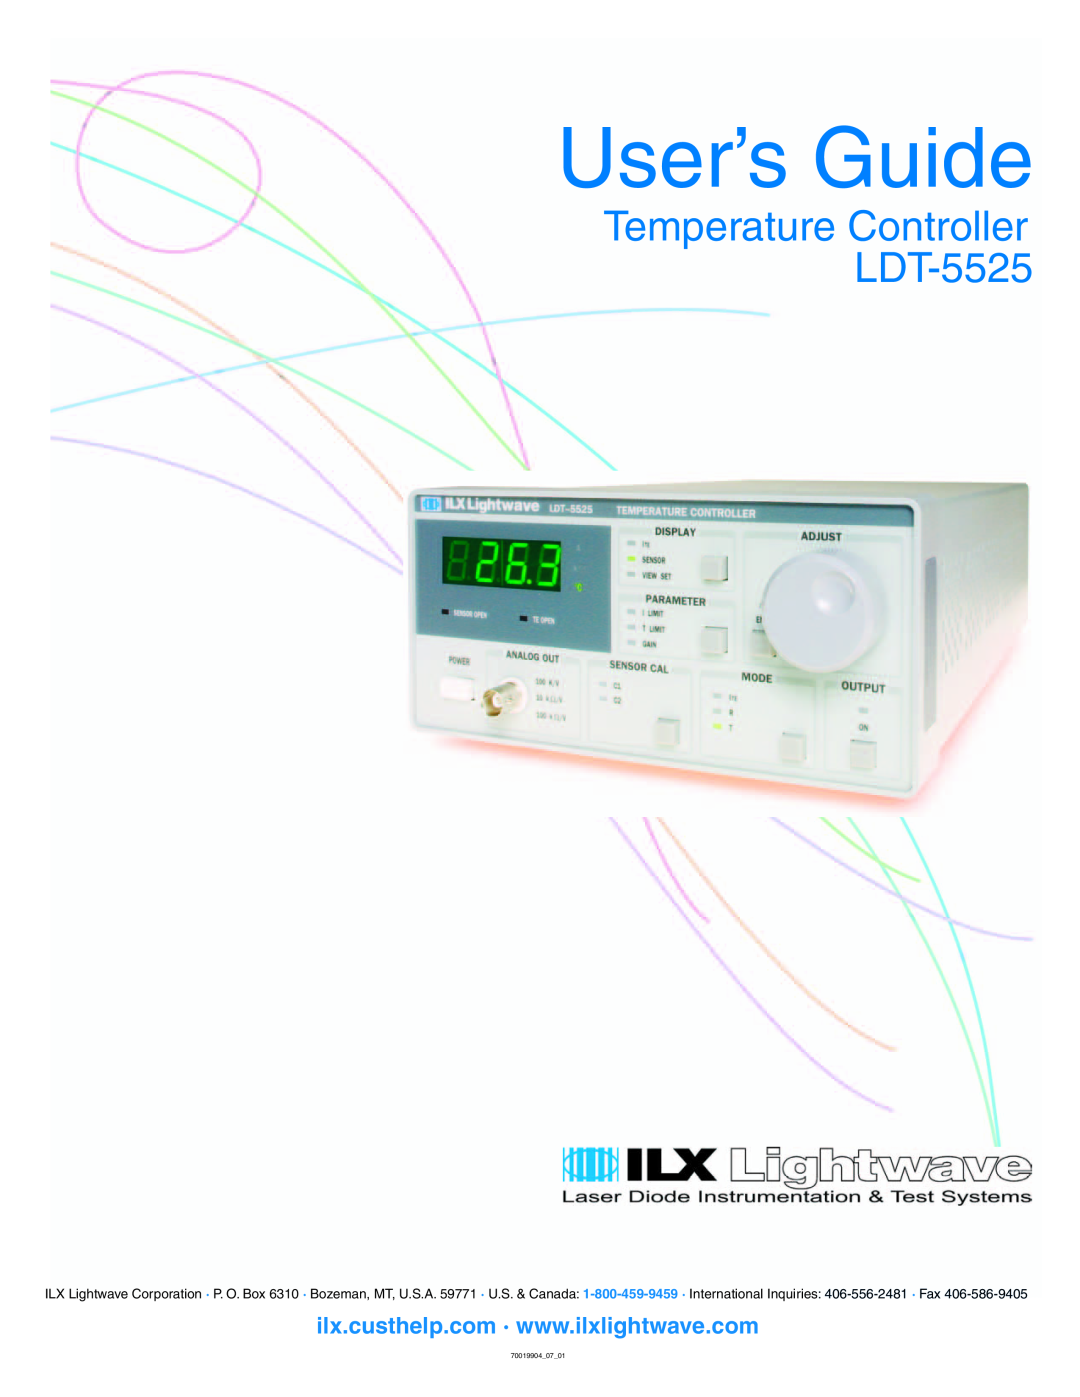 Lightwave Communications manual User’s Guide, Temperature Controller LDT-5525, 700199040701 